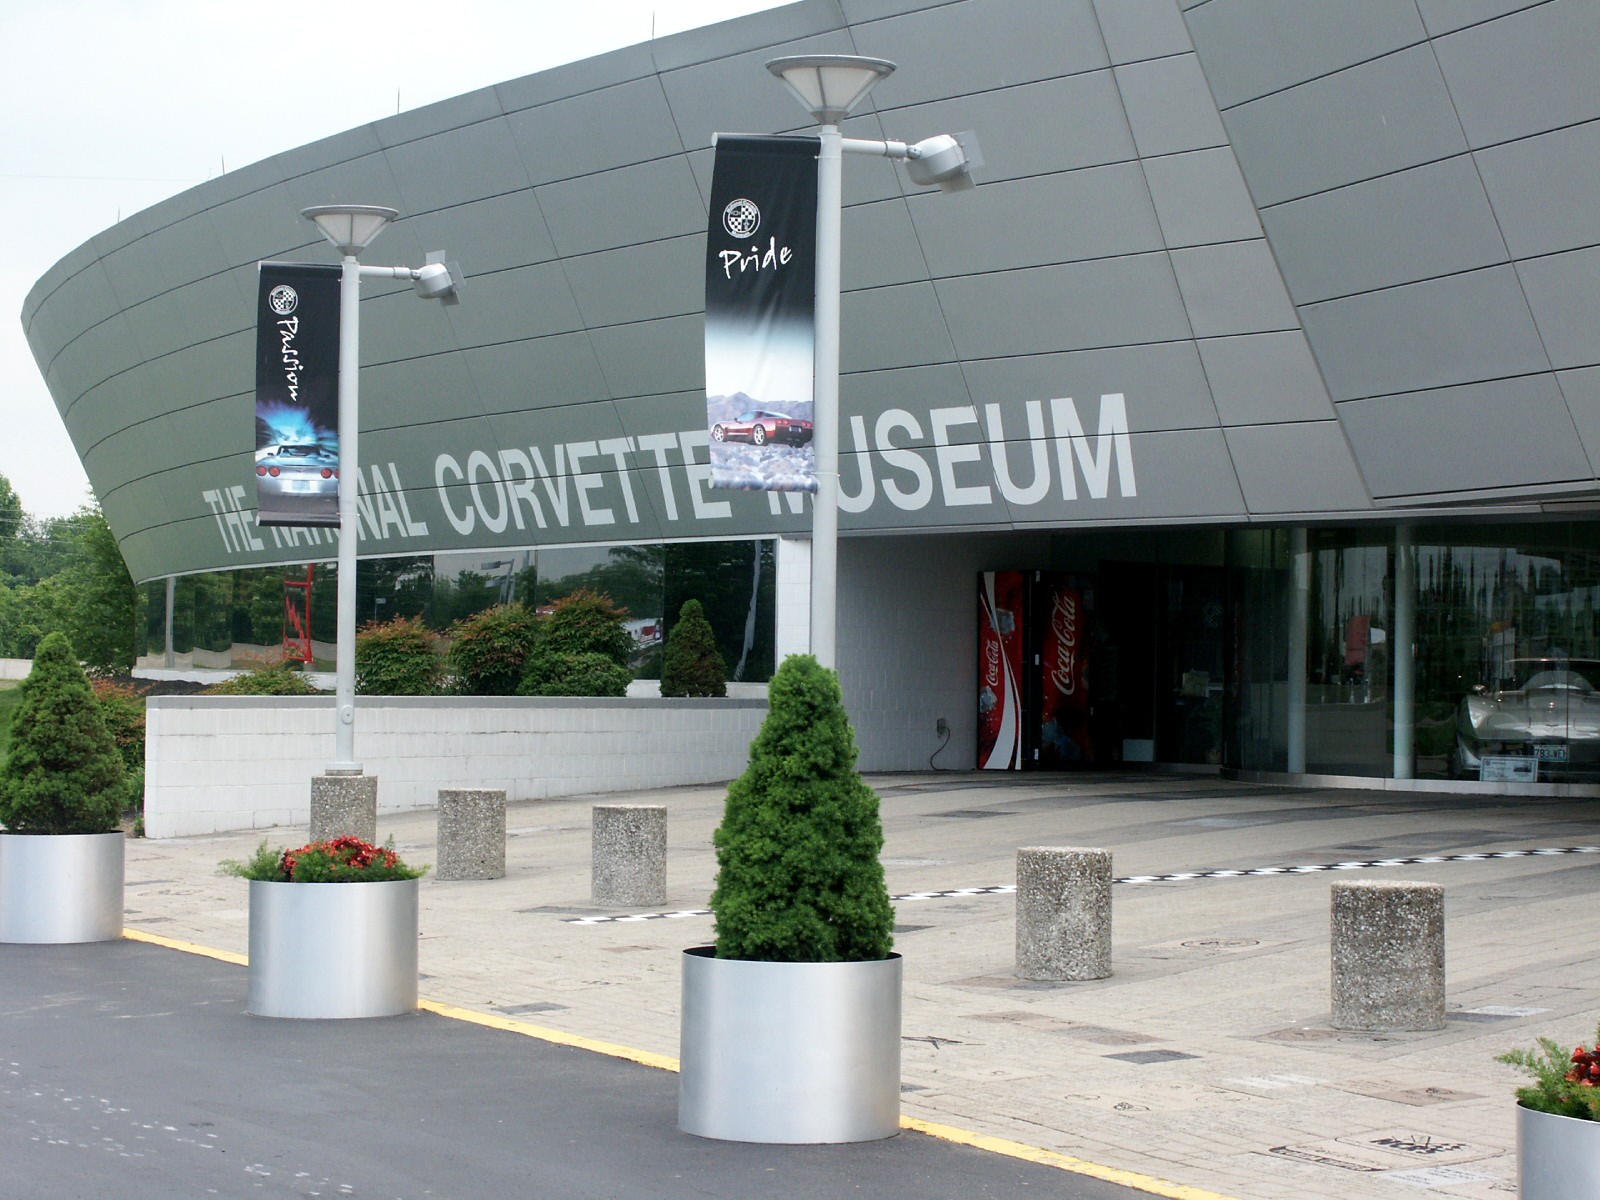 The National Corvette Museum